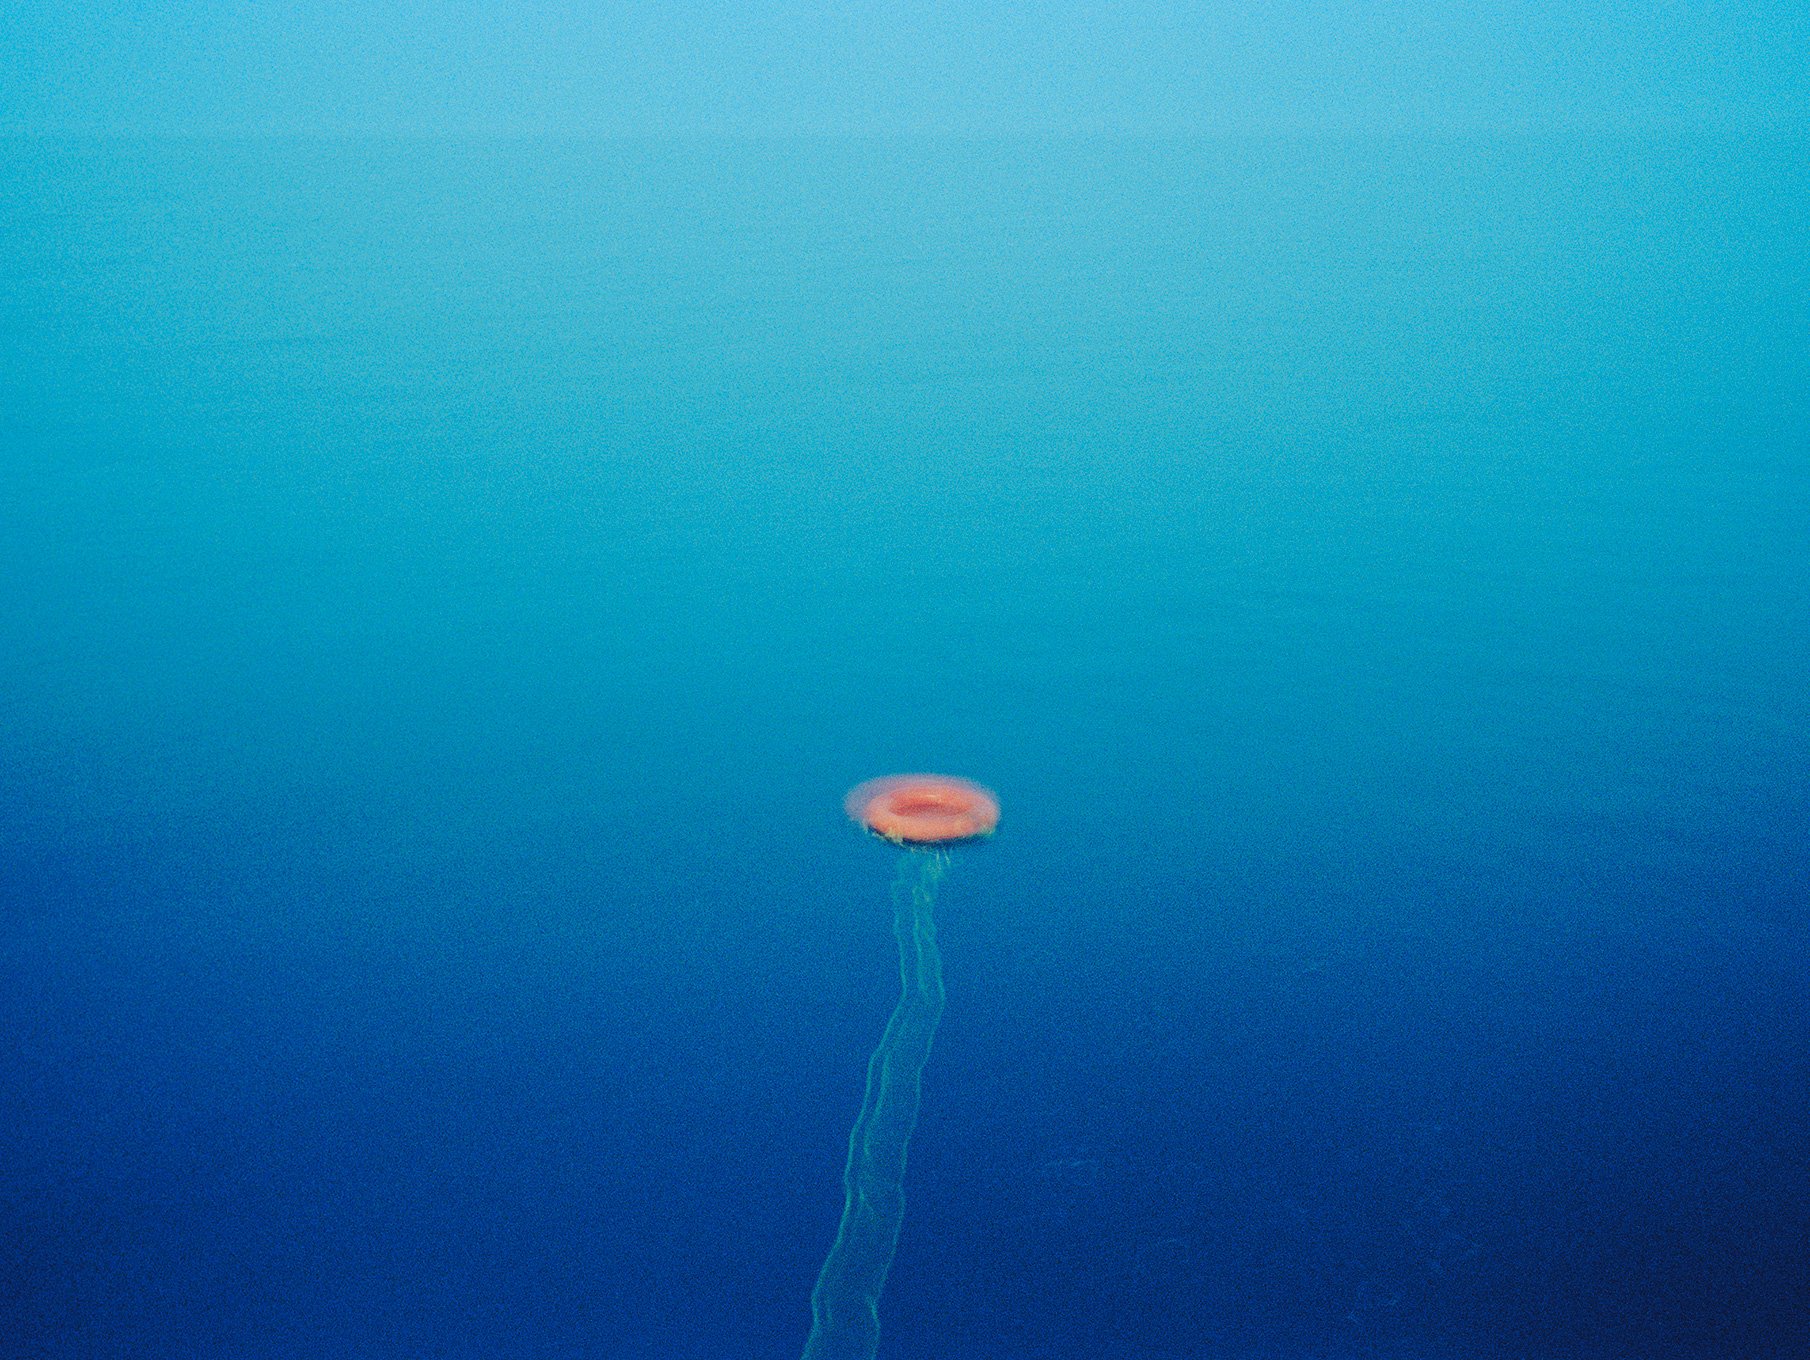   Life buoy,  Marsa Alam, Egypt, 2009  